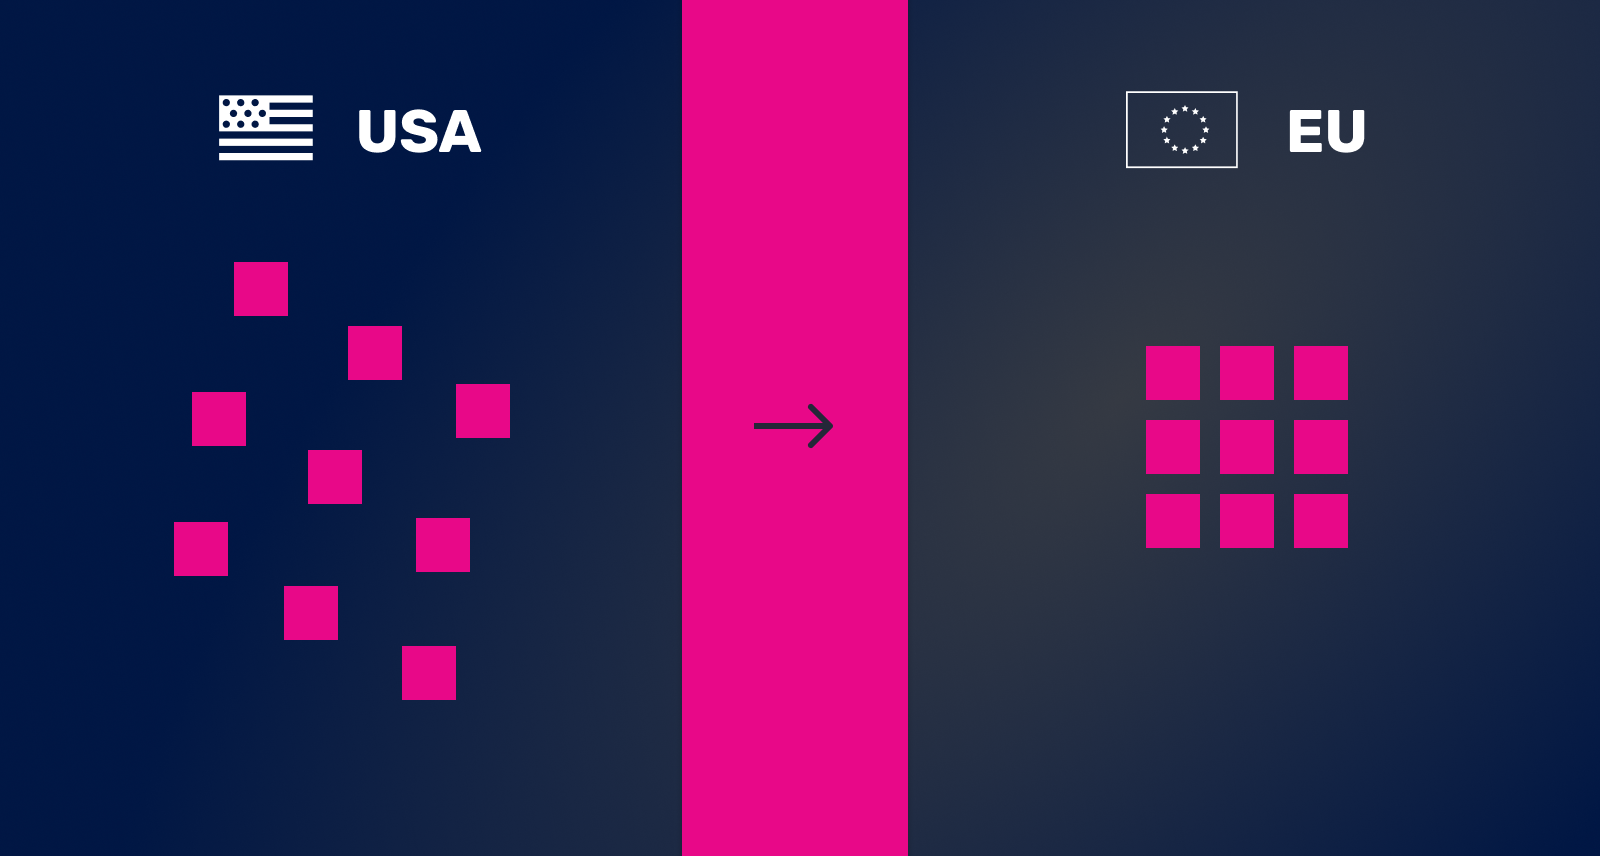 Blocks with USA formatting and EU formatting.